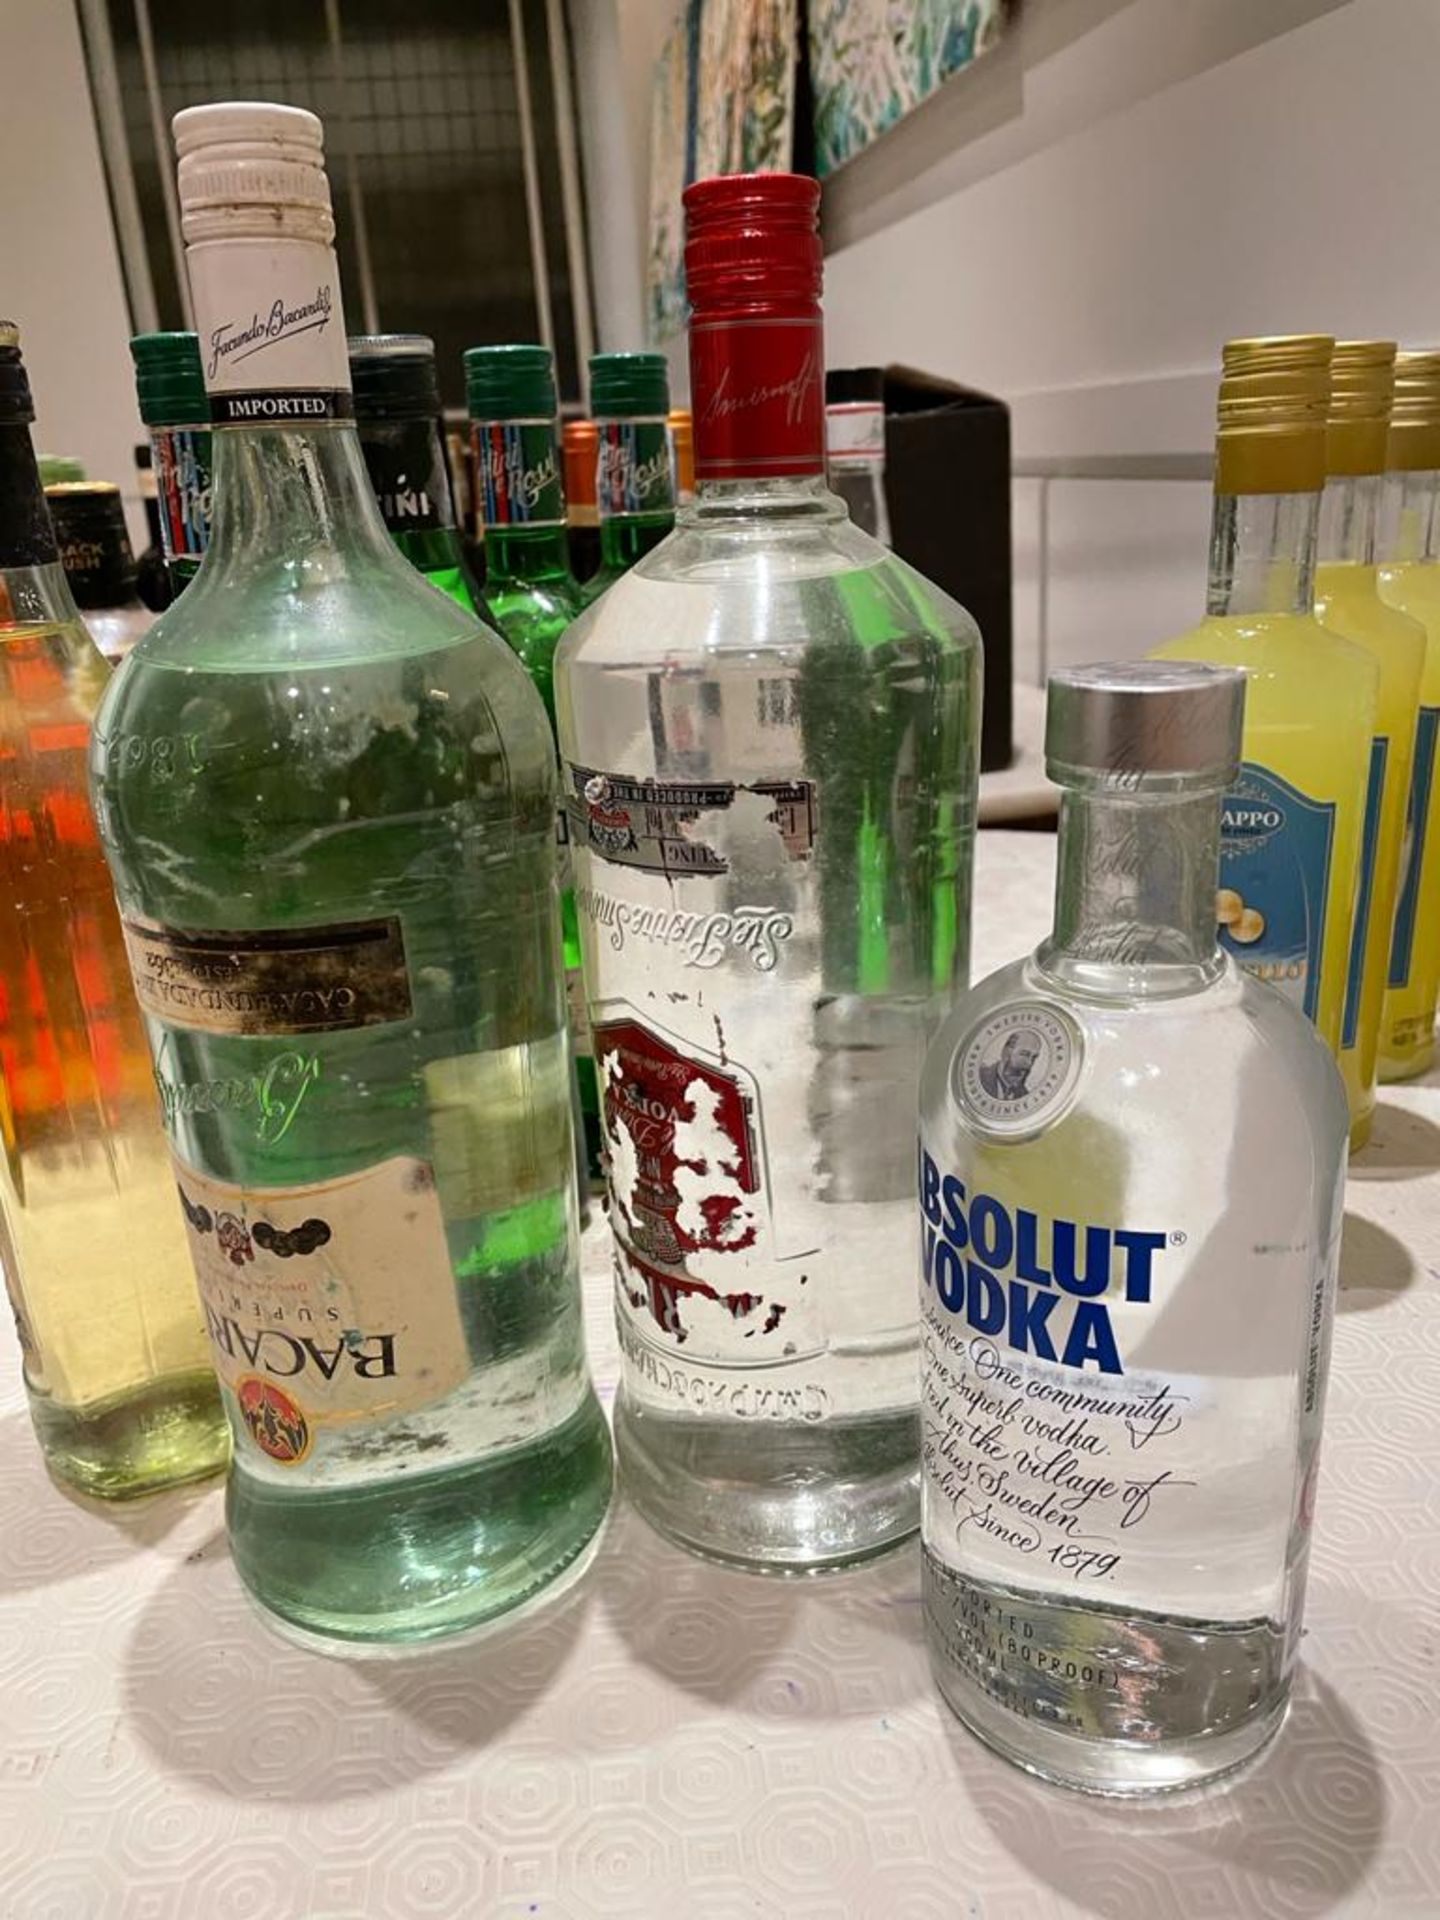 3 x Assorted Bottles Of Spirits - Lot Includes: 1 x BACARDI, 1 x ABSOLUTE VODKA, 1 x SMIRNOFF